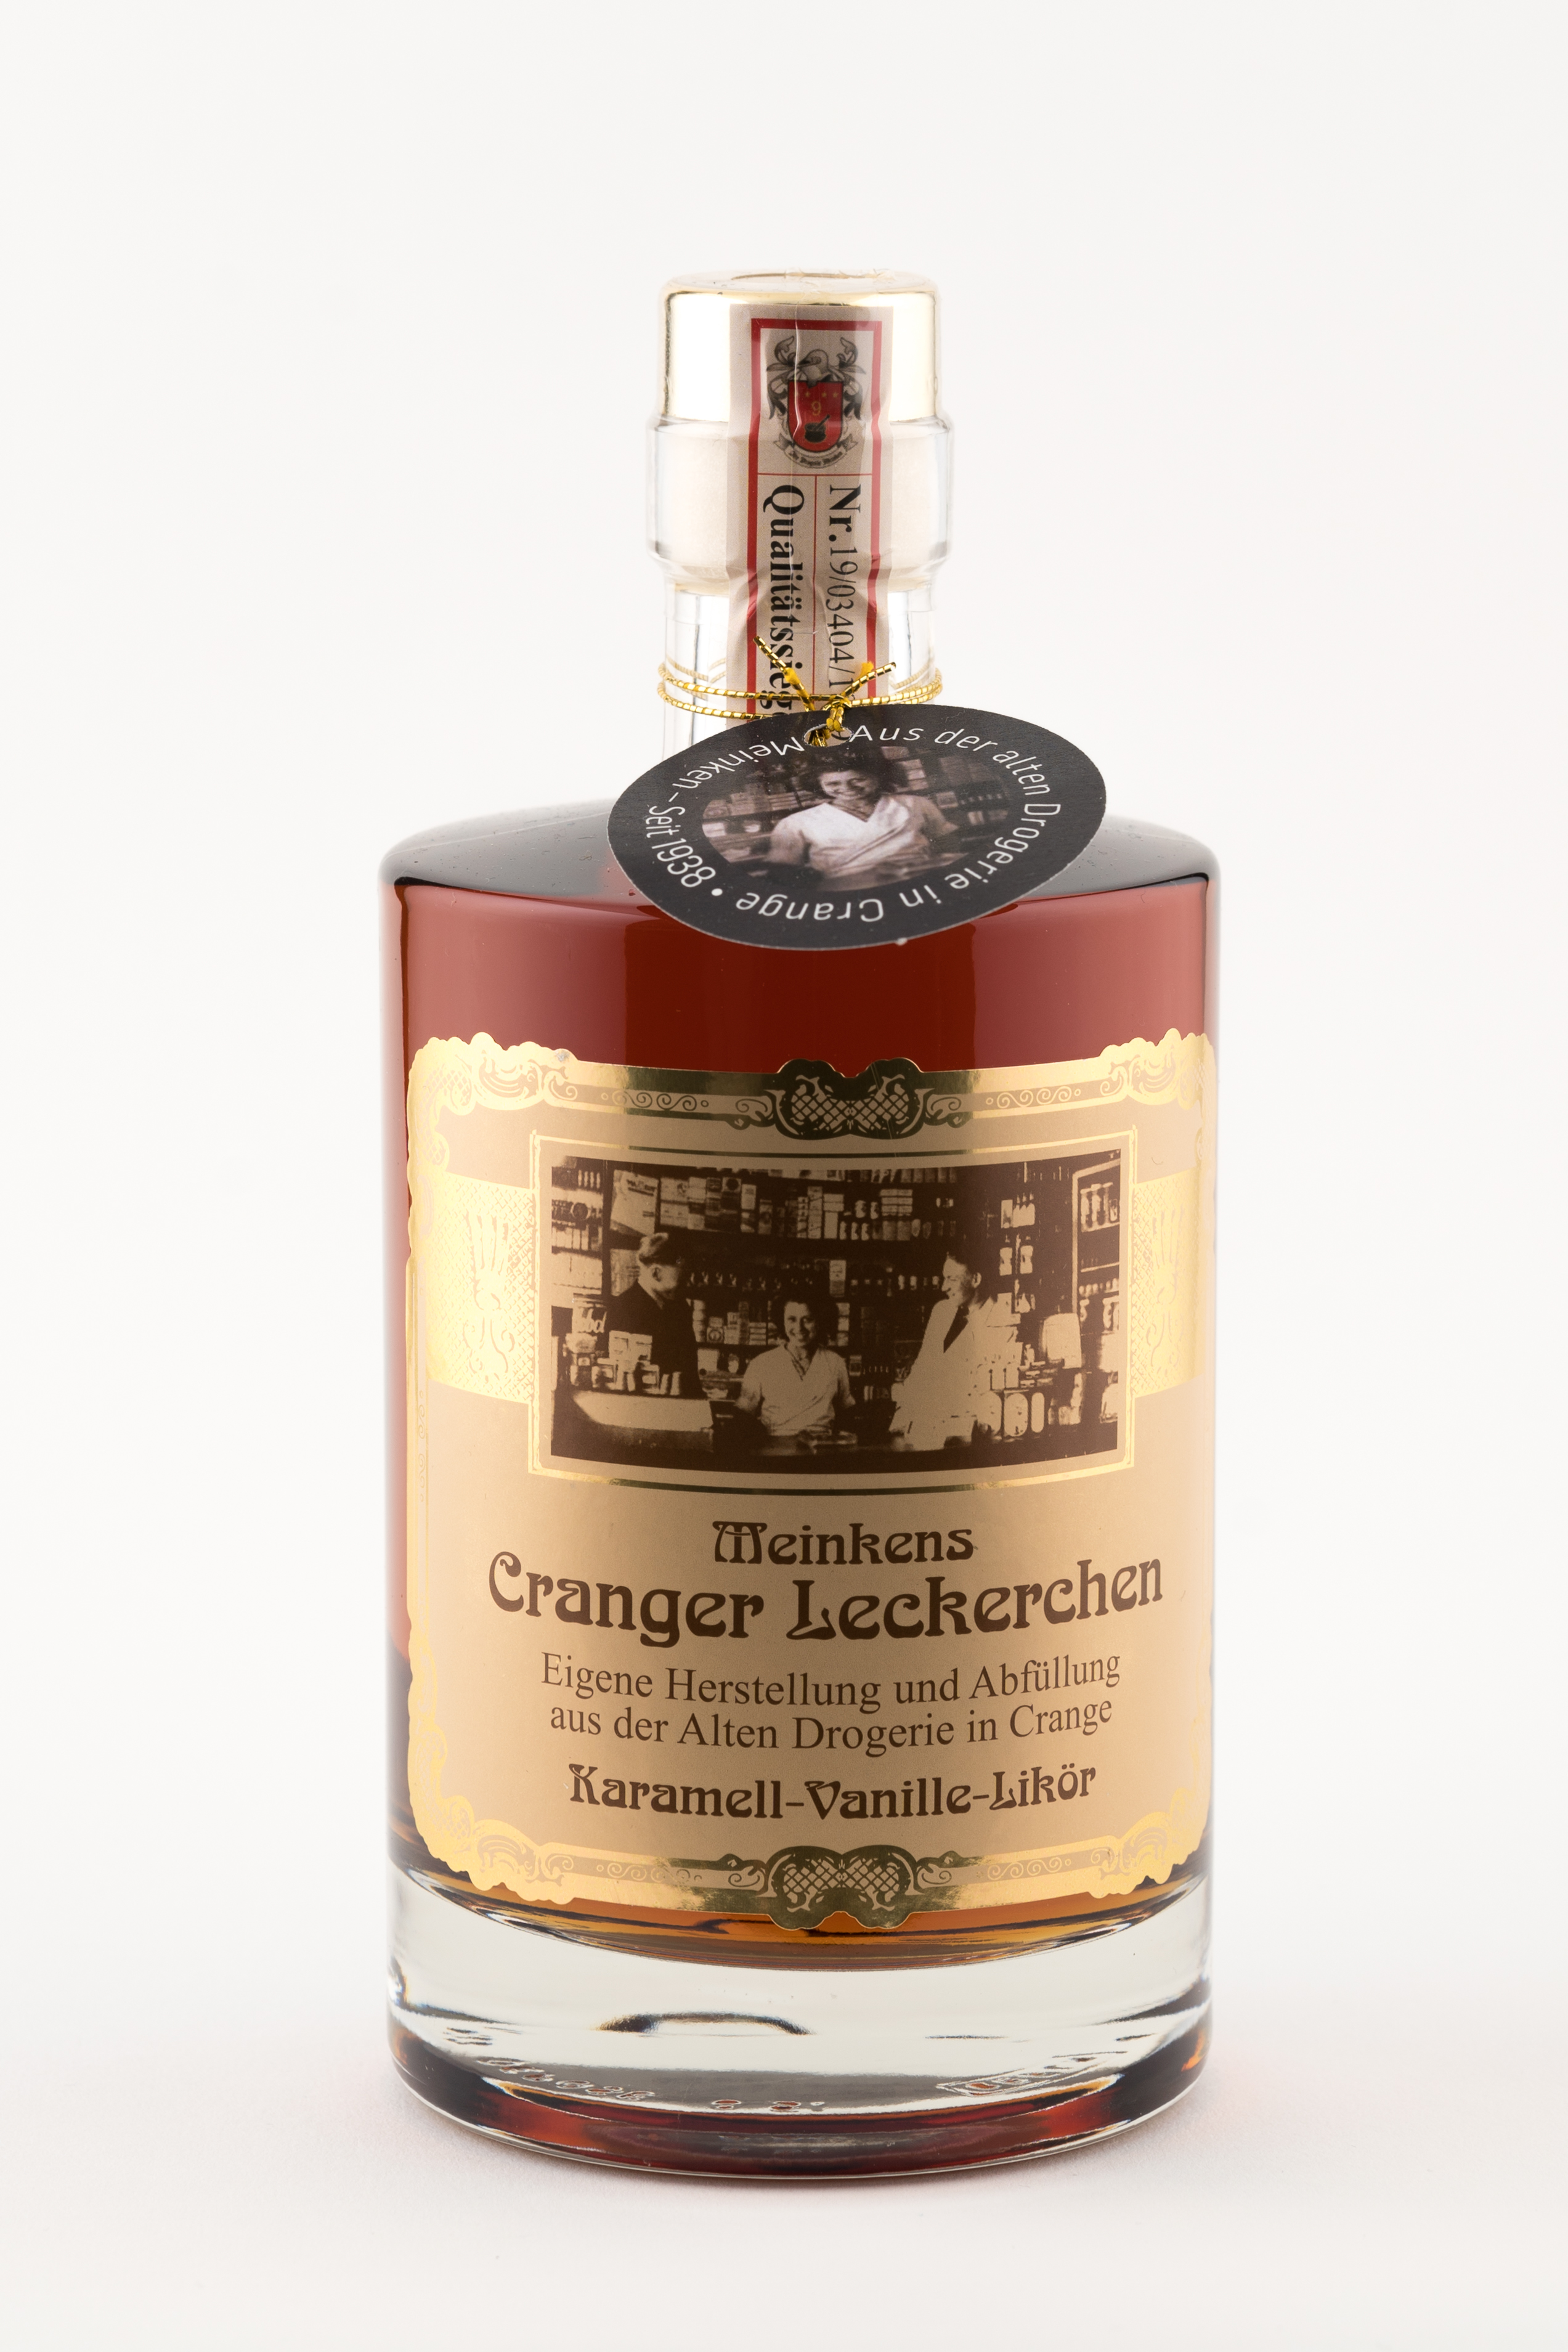 Karamell-Vanille-Likör "Cranger Leckerchen" 0,5l